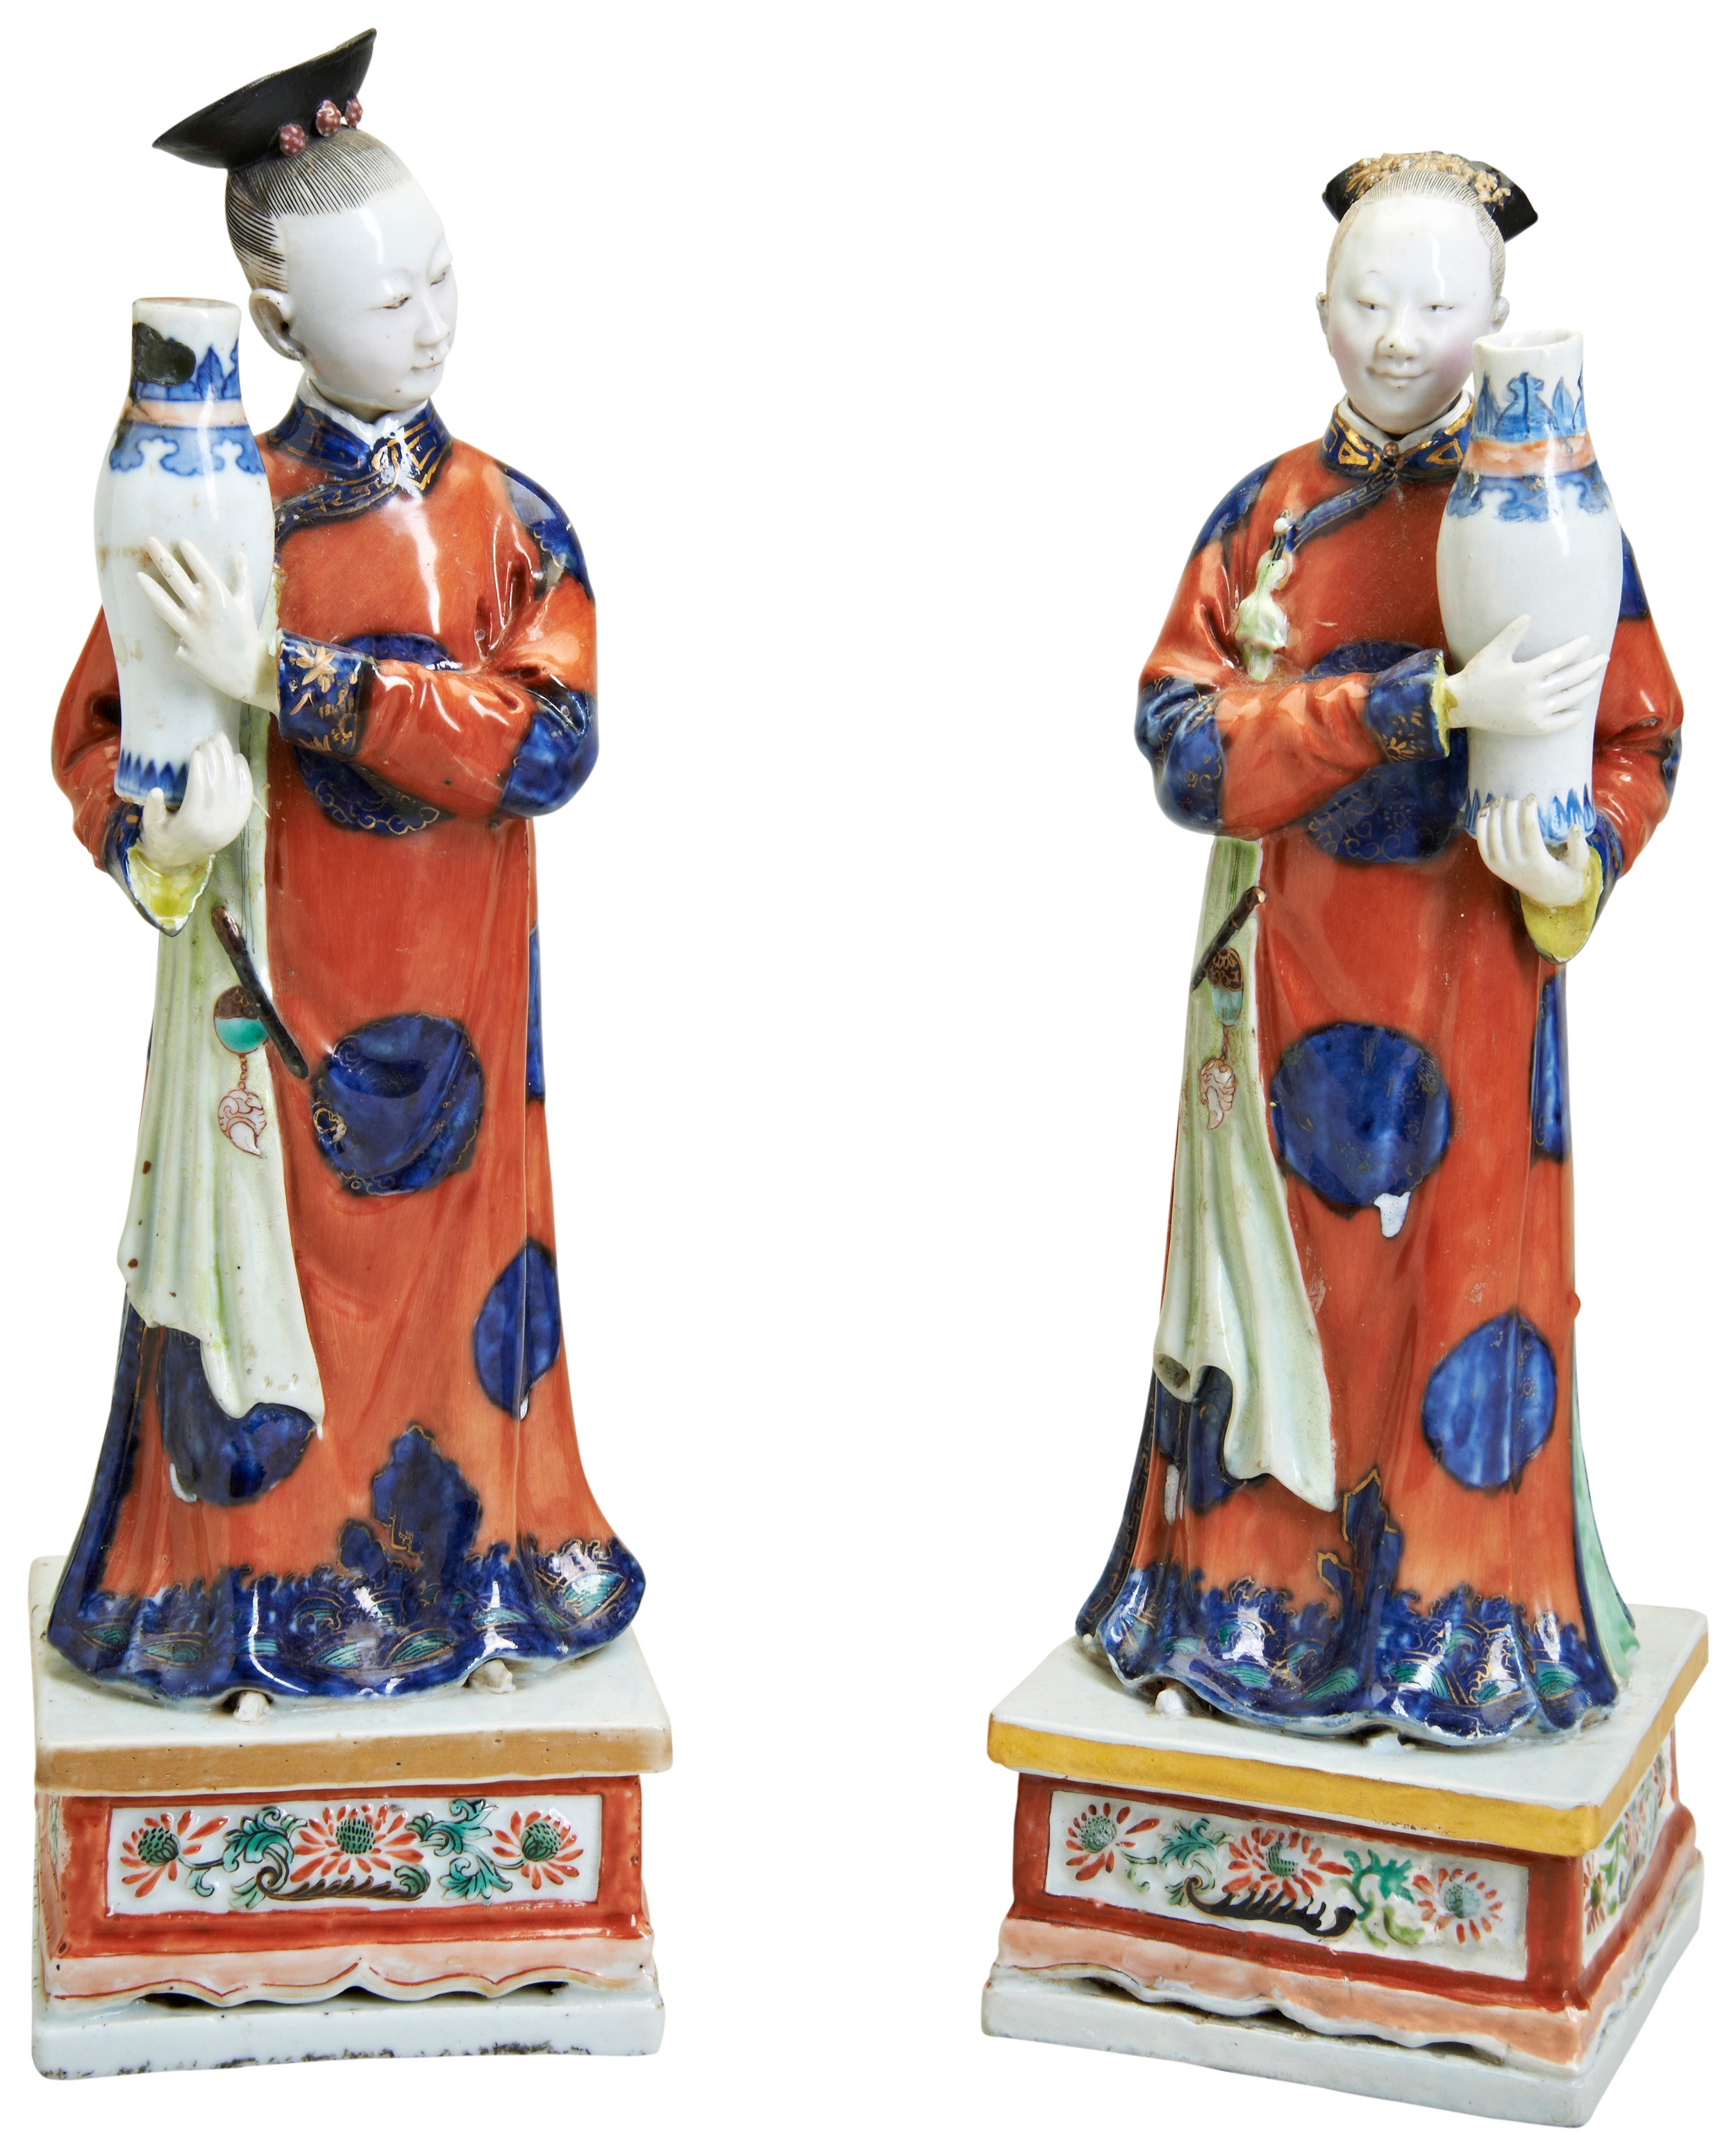 A PAIR OF CHINESE EXPORT PORCELAIN NODDING HEAD LADIES QIANLONG PERIOD (1736-1795) 清 乾隆粉彩侍女瓷塑一对 each